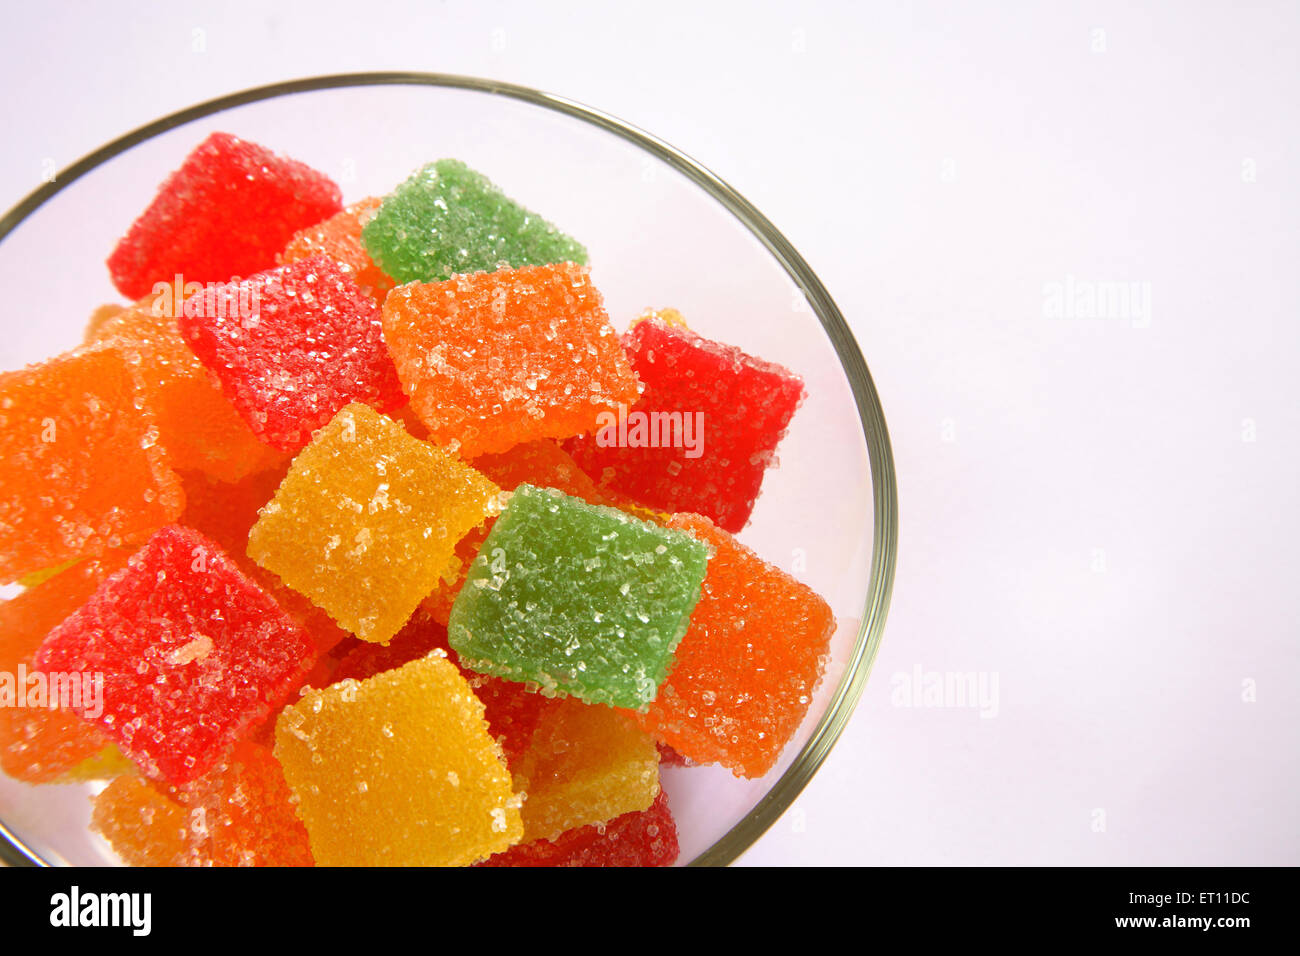 Jelly candy, Jelly toffee, Jelly snack, Fruit Jelly, Jelly sugar coated, mixed fruit jelly candy, Stock Photo